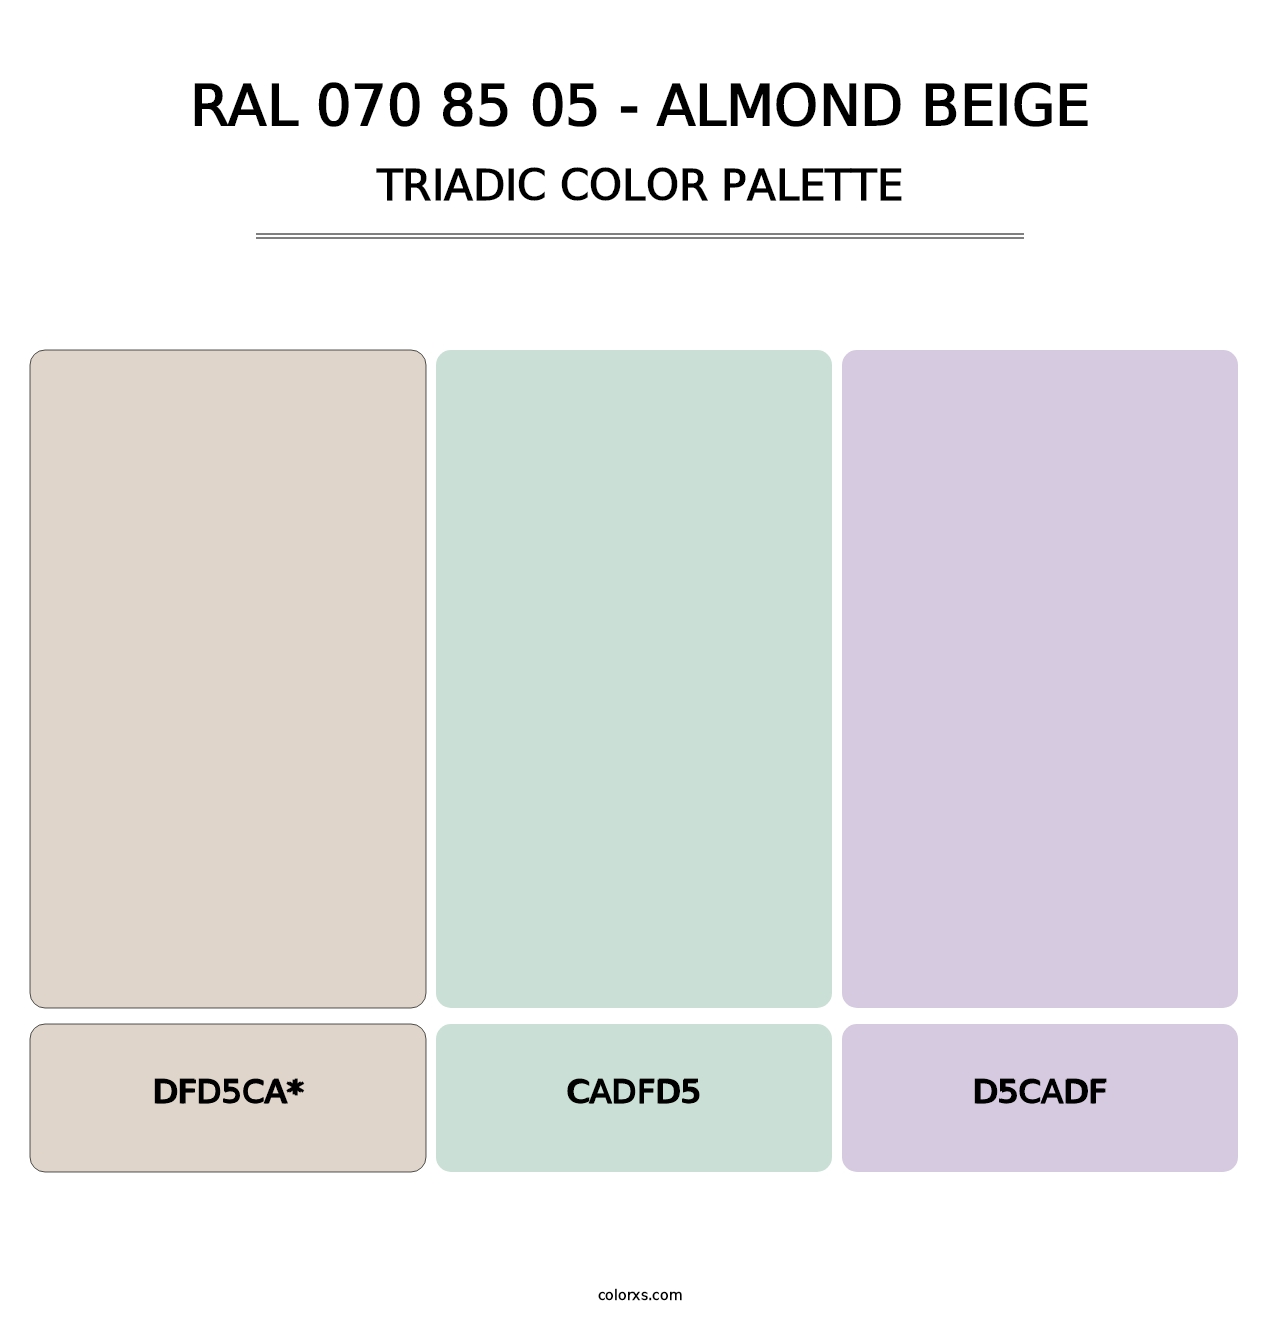 RAL 070 85 05 - Almond Beige - Triadic Color Palette